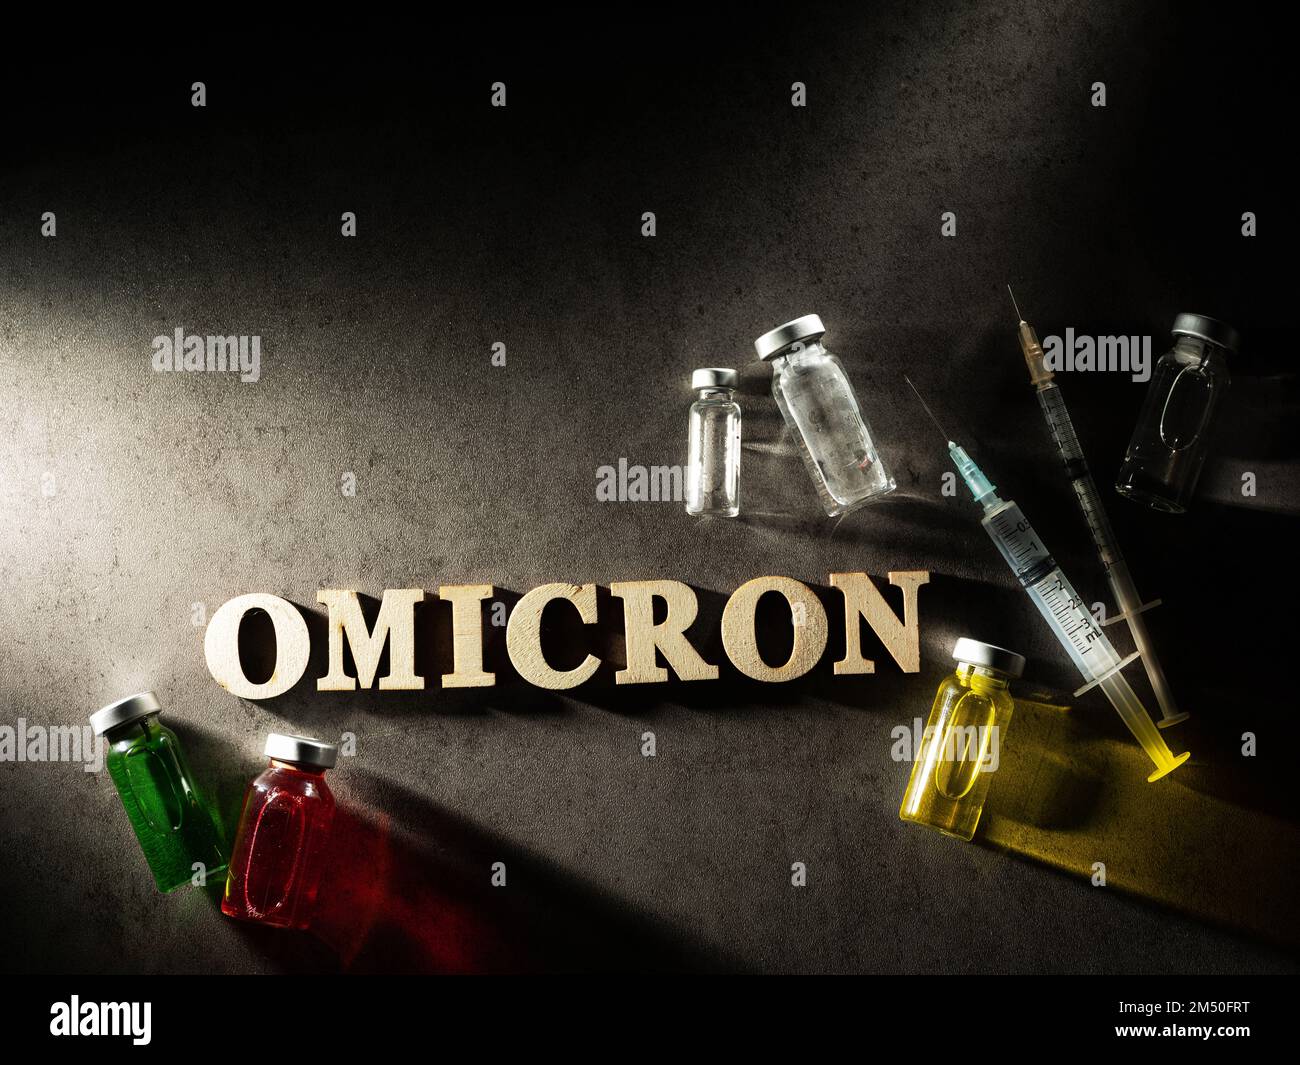 Omicron word, syringe and drugs Stock Photo